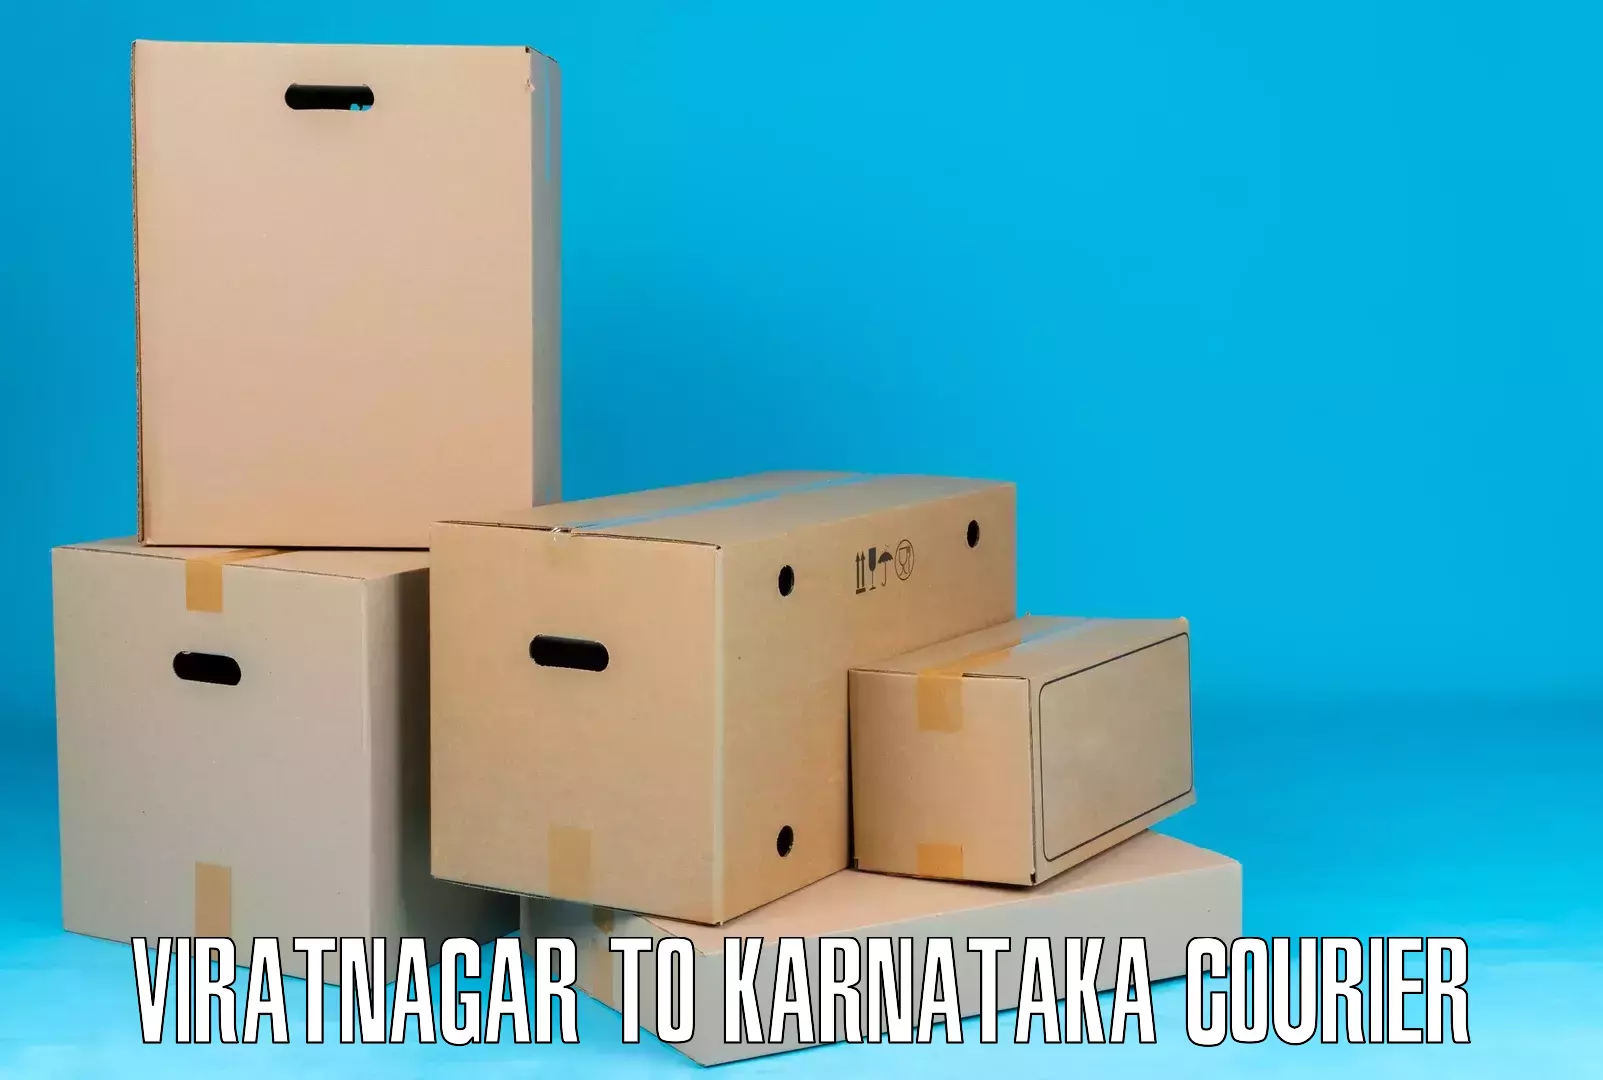 Supply chain delivery Viratnagar to Yenepoya Mangalore